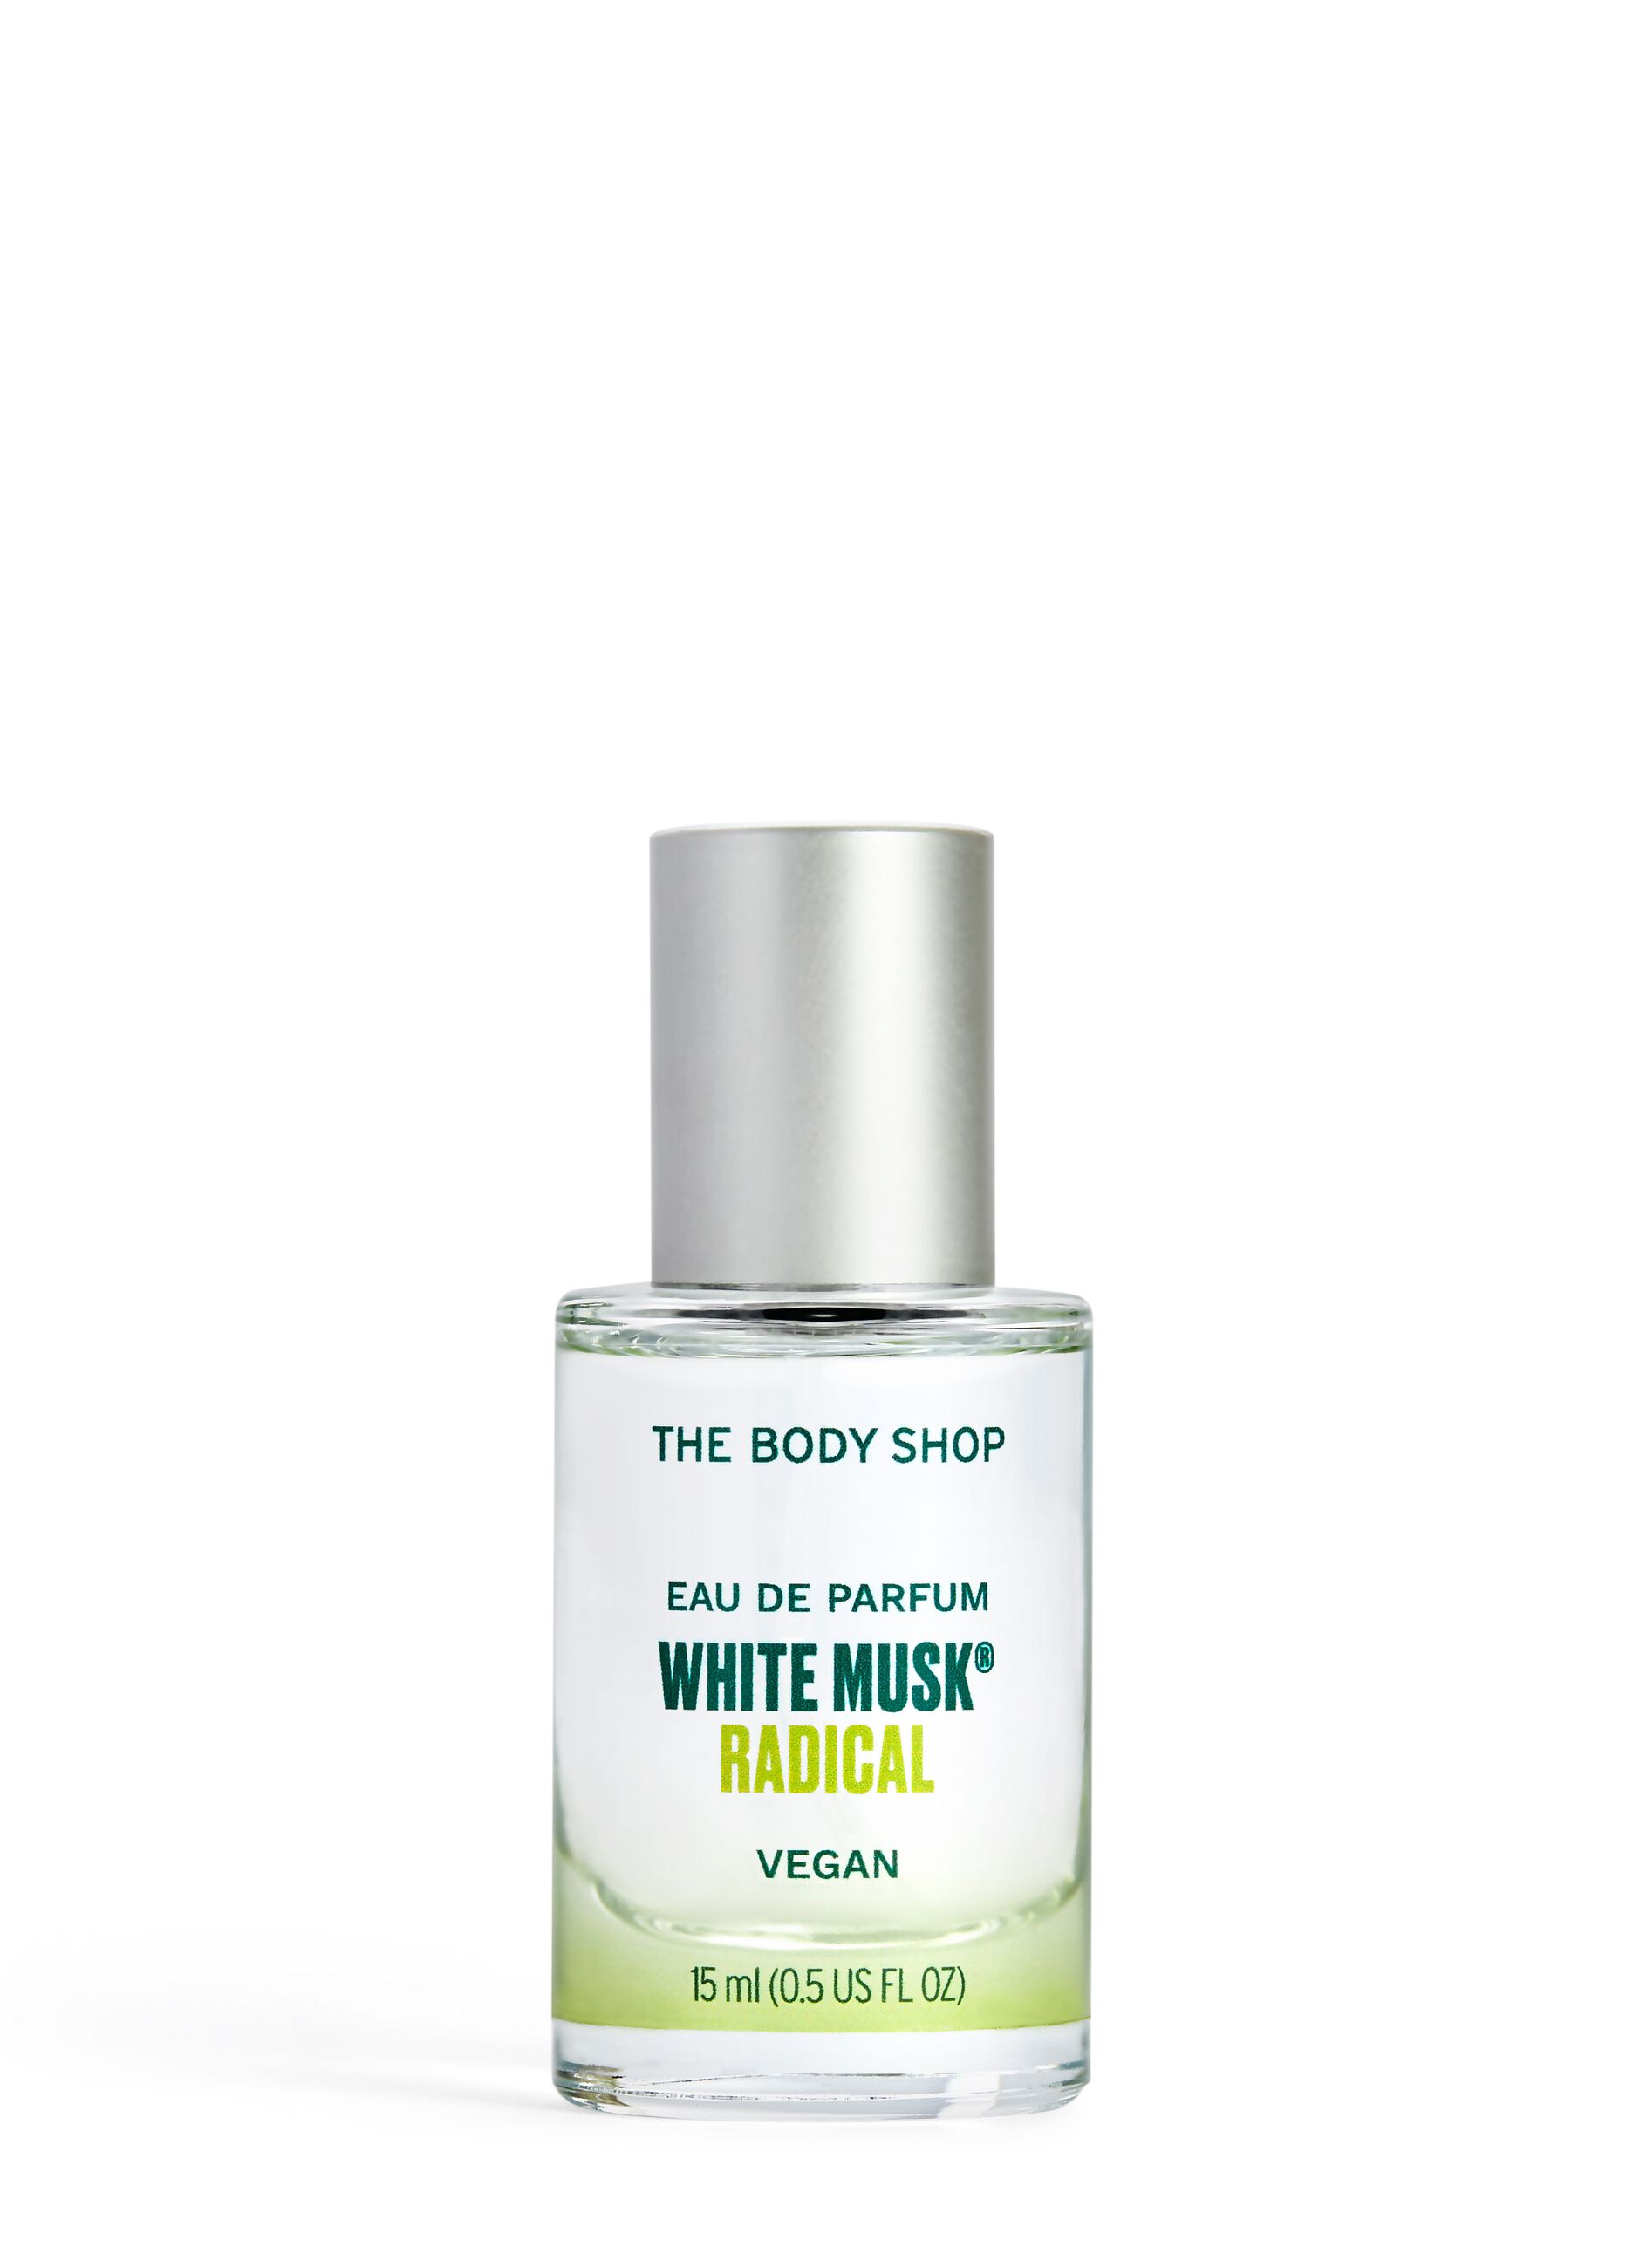 The Body Shop White Musk® Radical Eau de Parfum 15ml